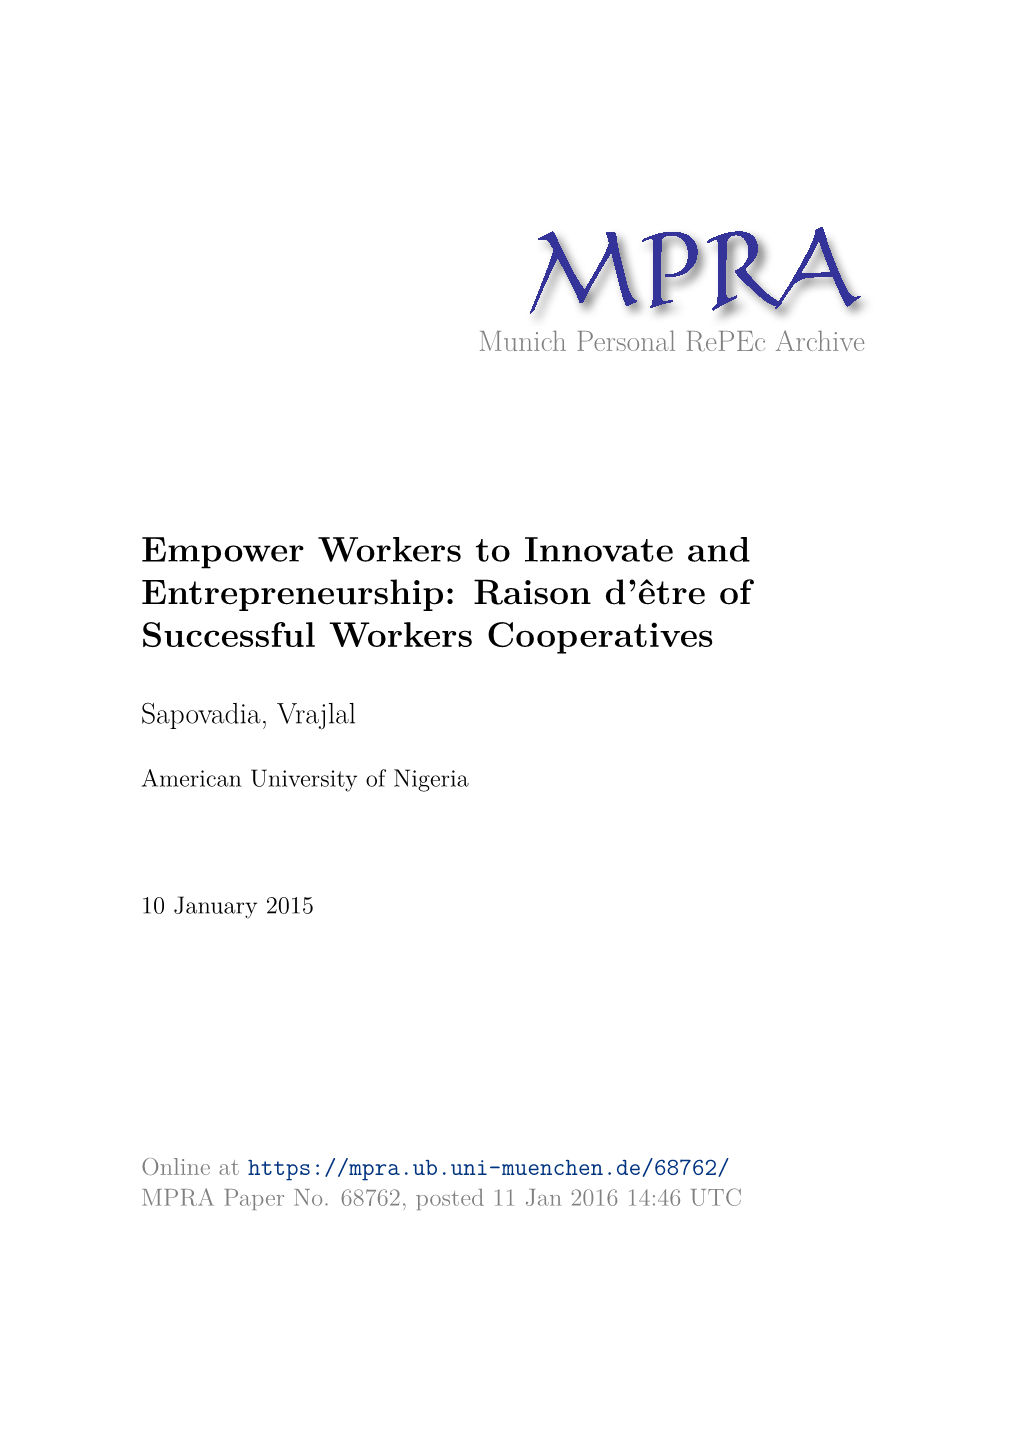 Raison D'être of Successful Workers Cooperatives” Dr